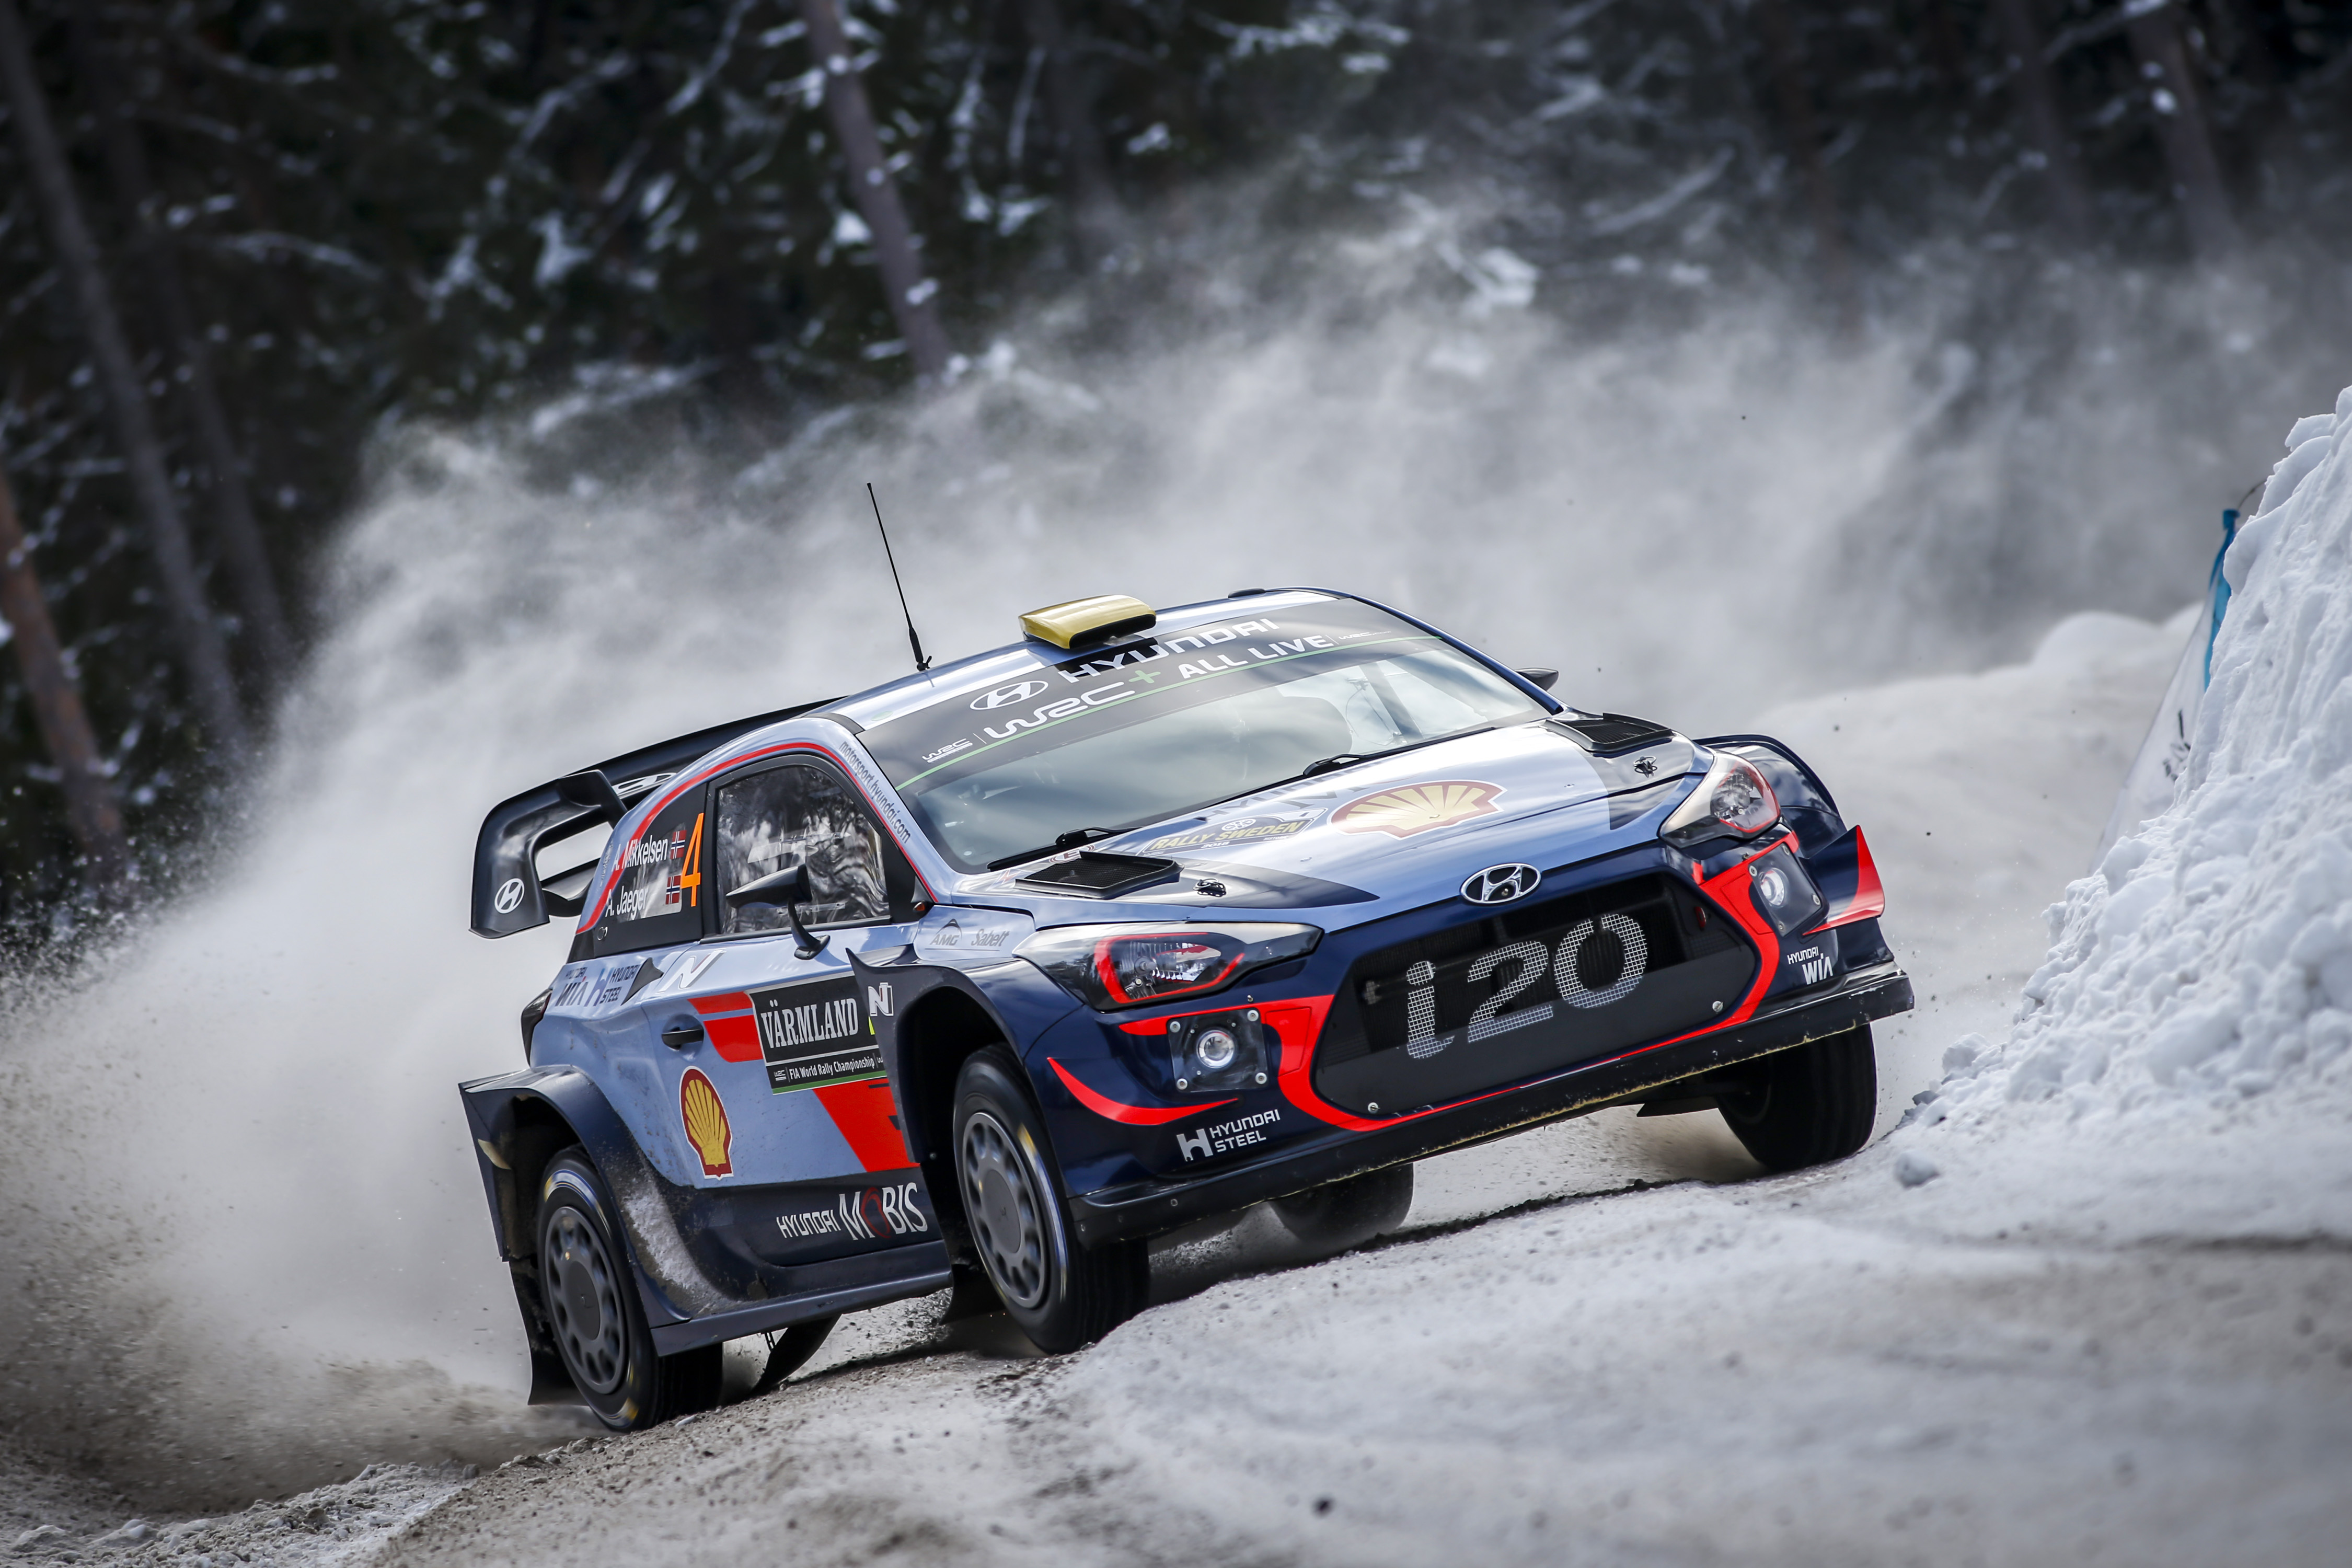 WRC - Rally of Sweden 2018 